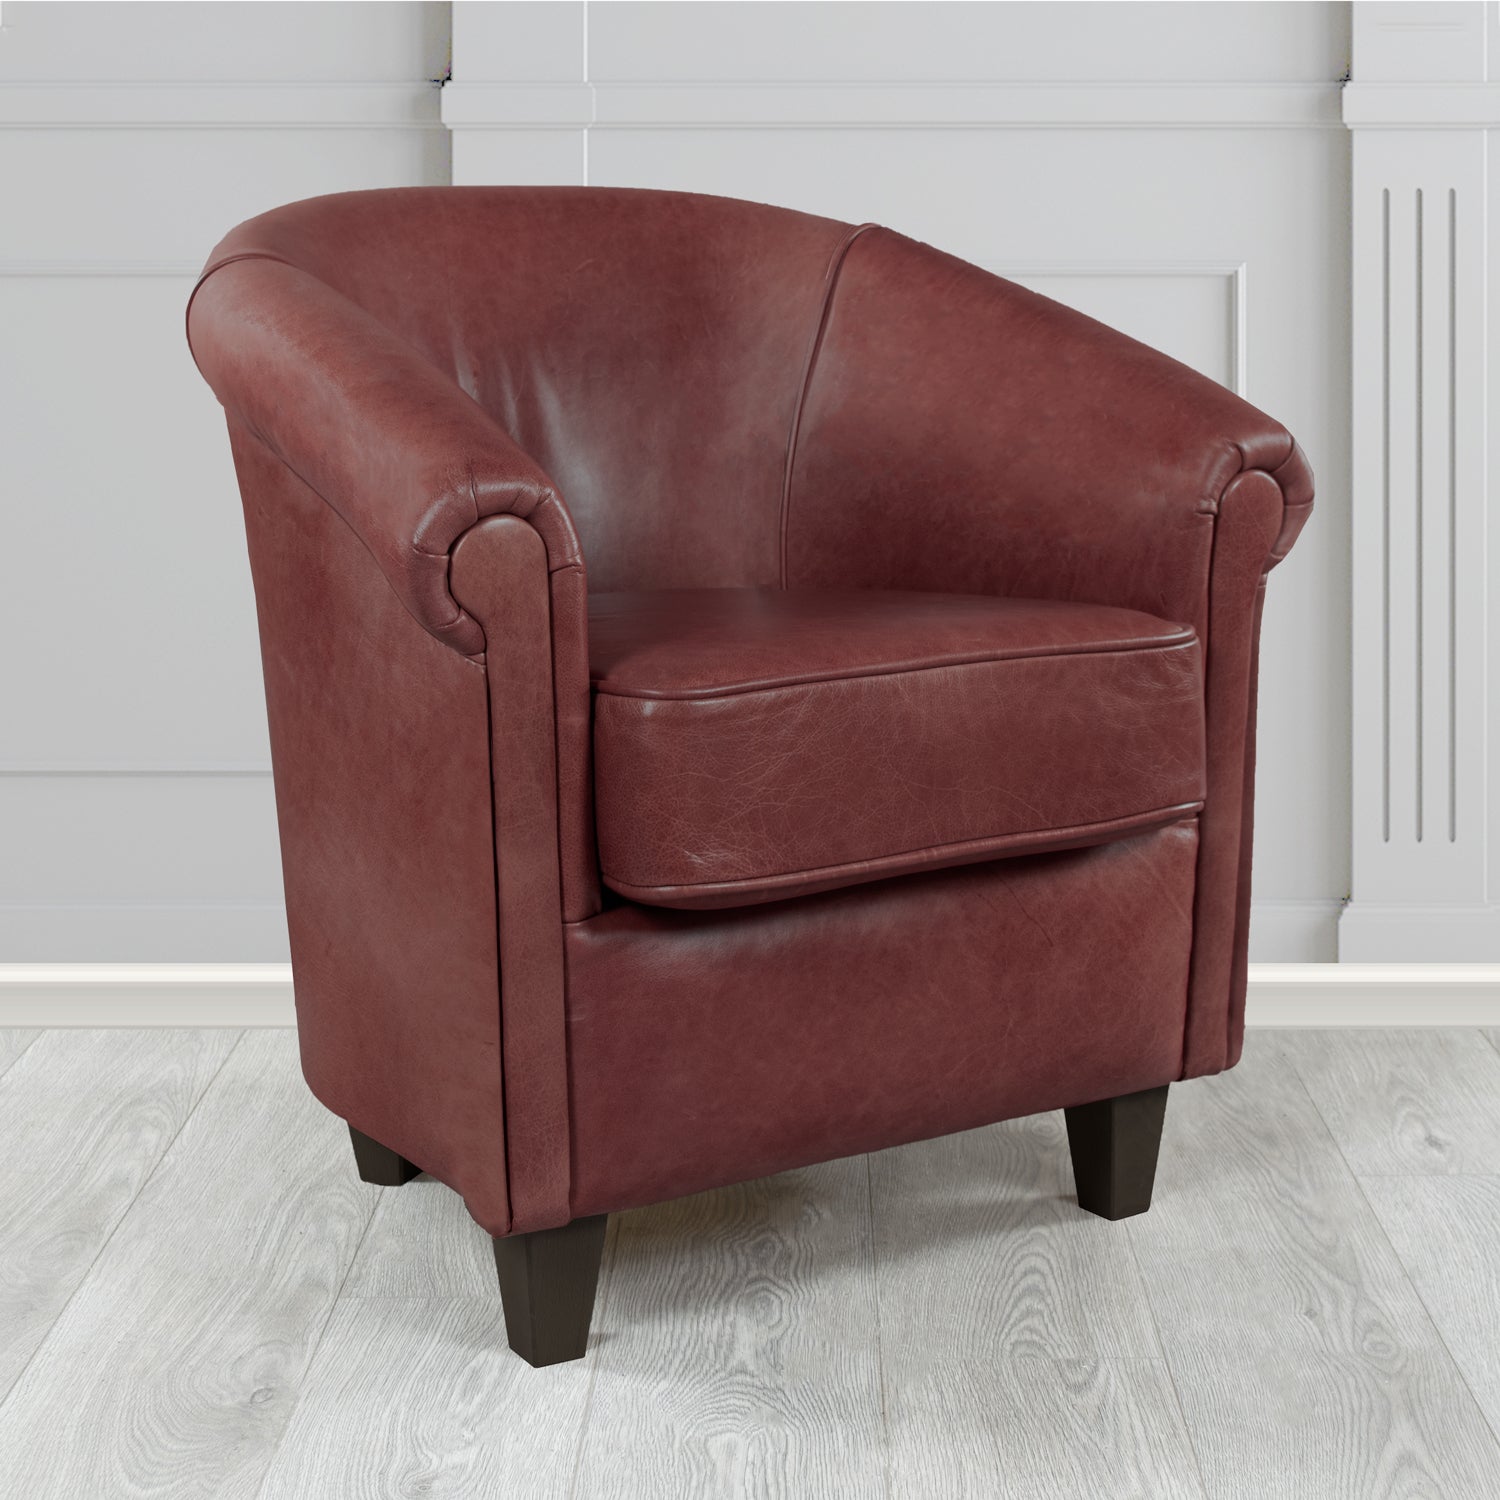 Siena Crib 5 Old English Red Brown Genuine Leather Tub Chair (4683638145066)